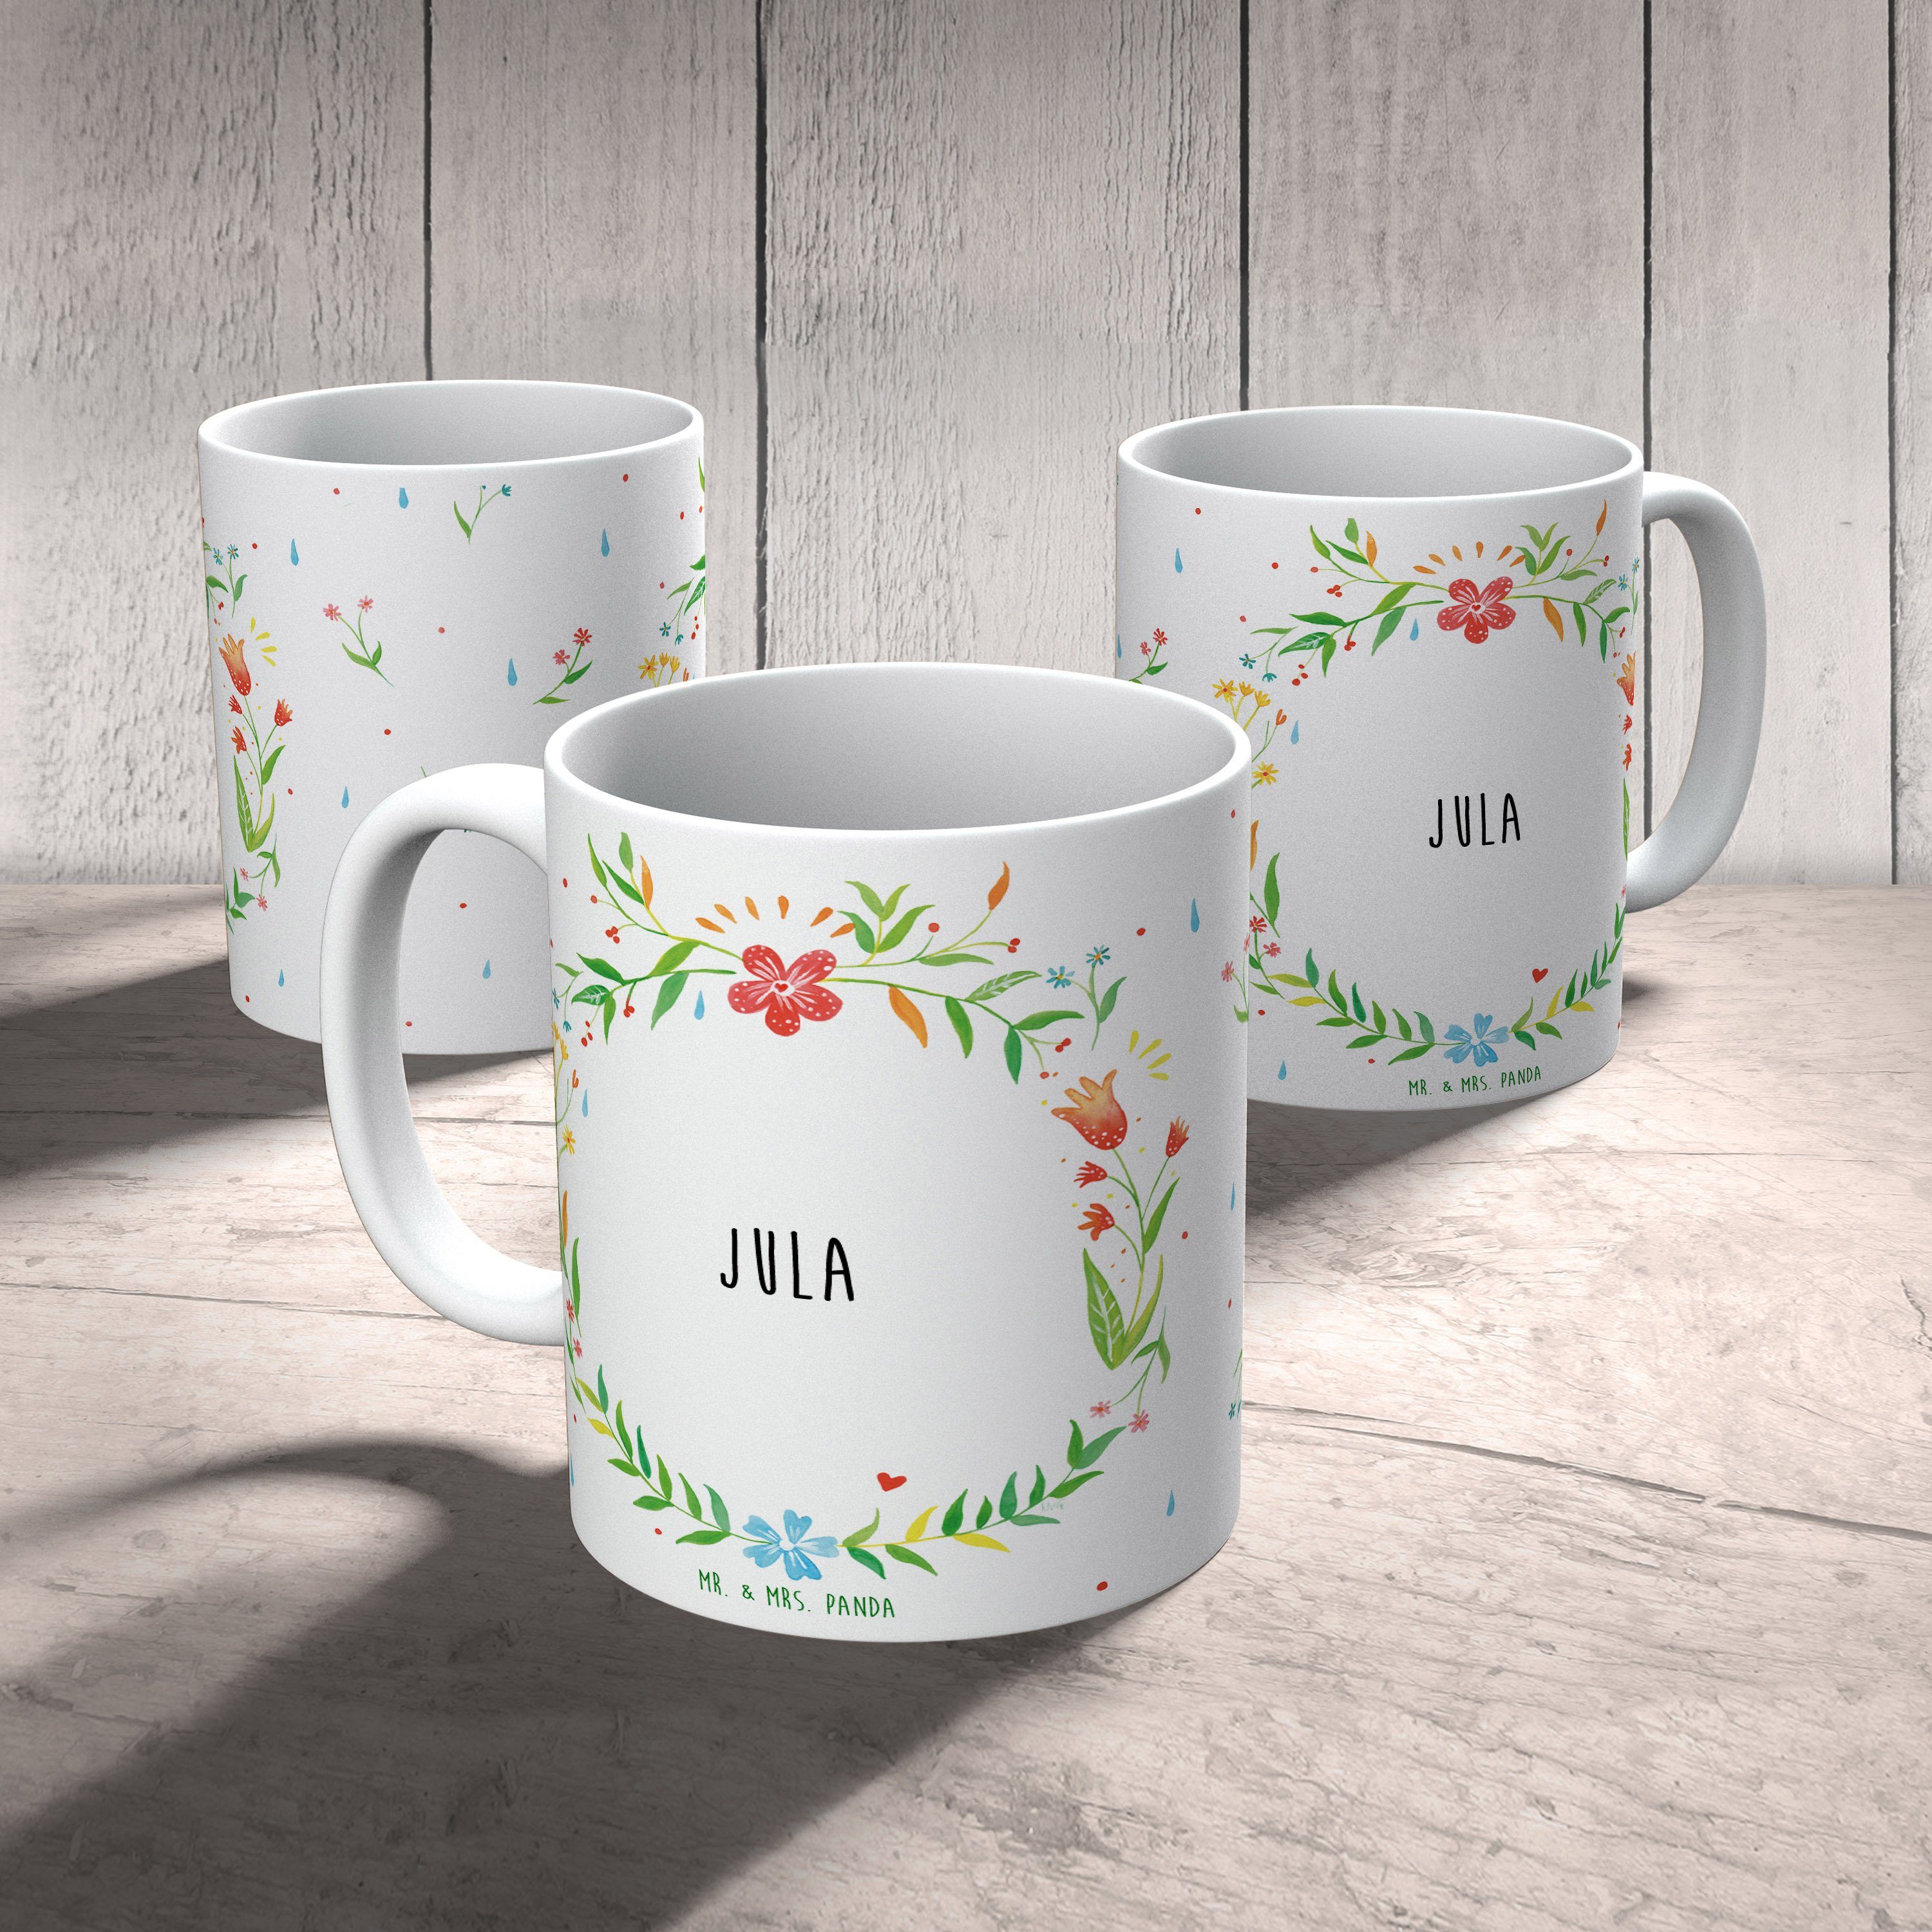 Mr. & Mrs. Panda Tasse Geschenk, Keramiktasse, Büro Kaffeetasse, Tasse, Keramik - Tasse Motive, Jula